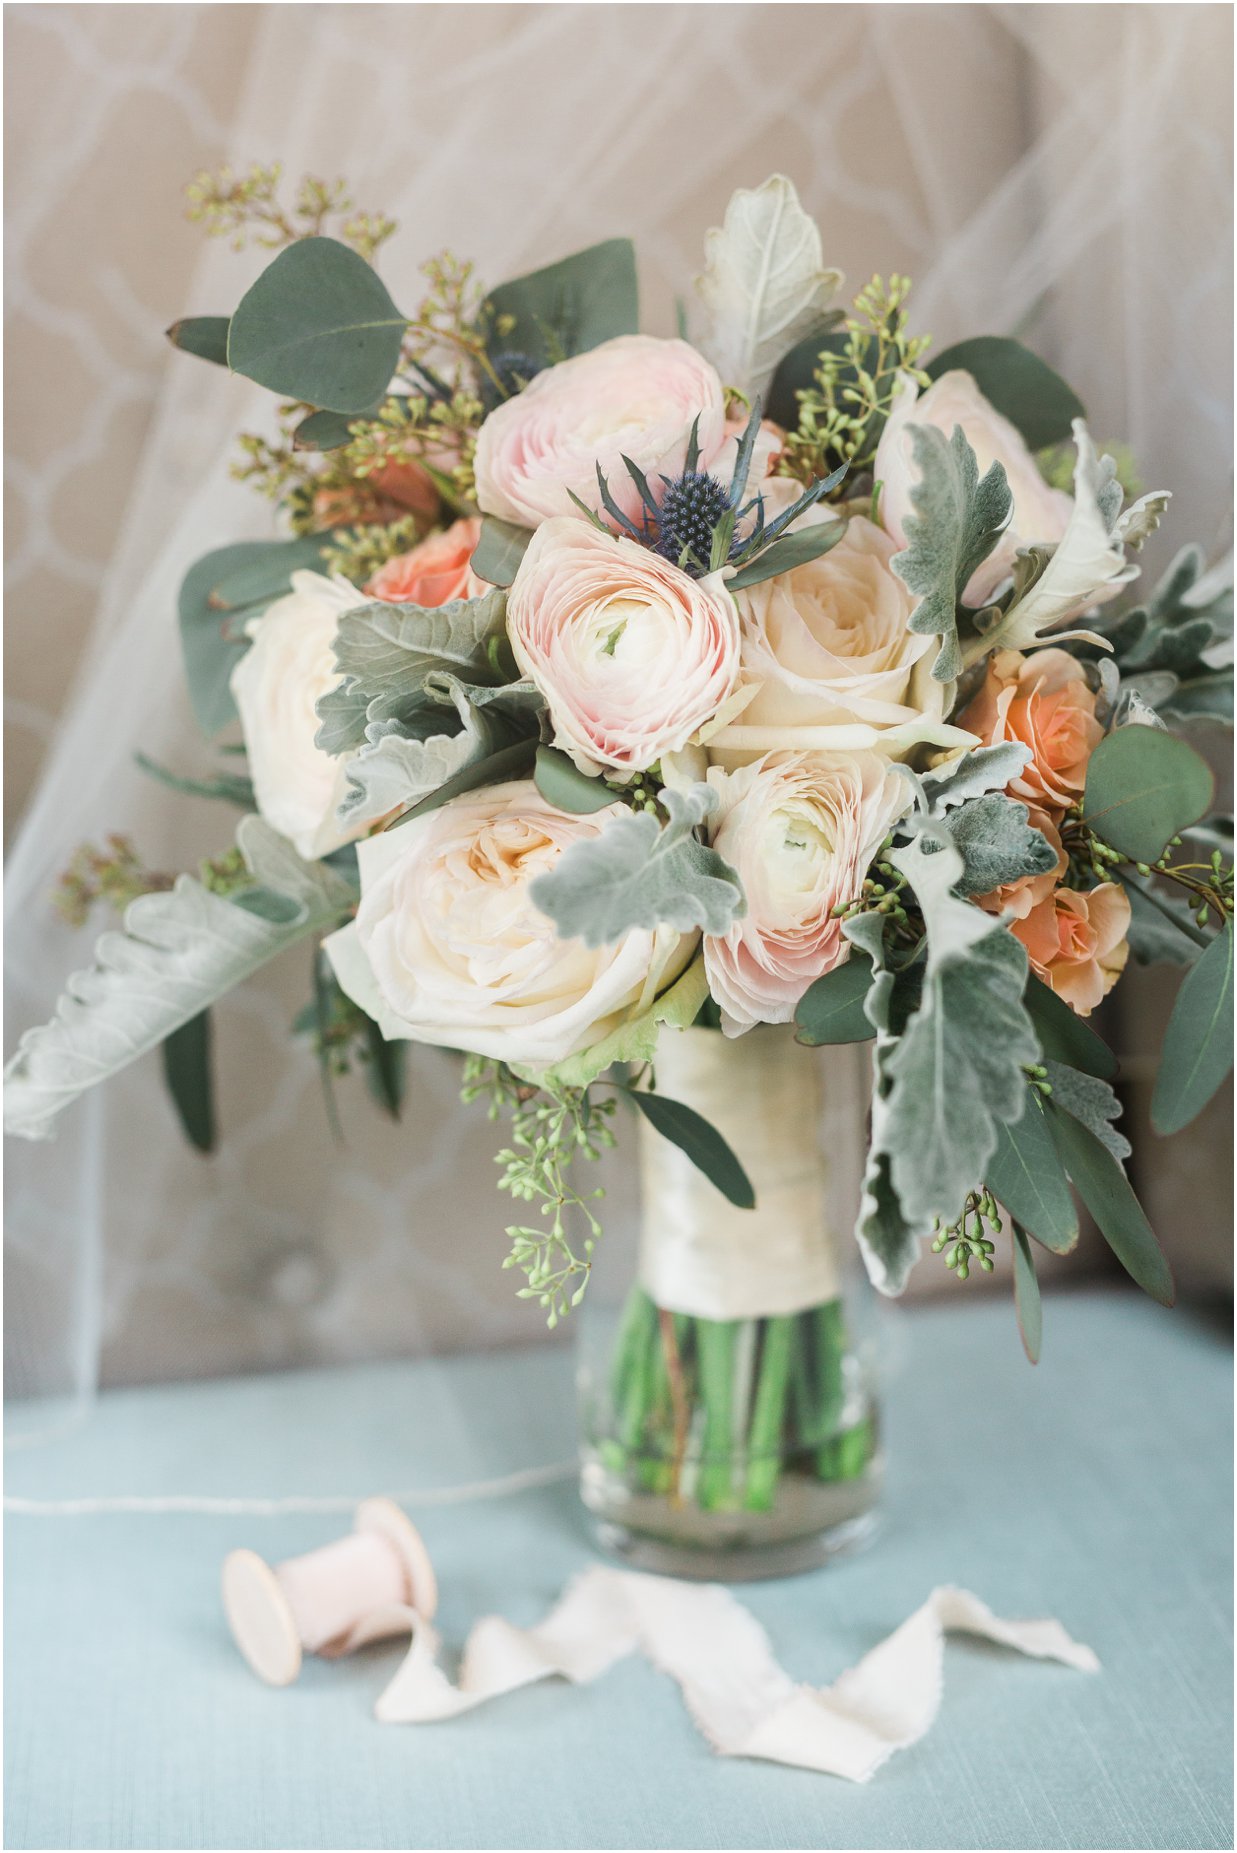 Wedding bouquet styling